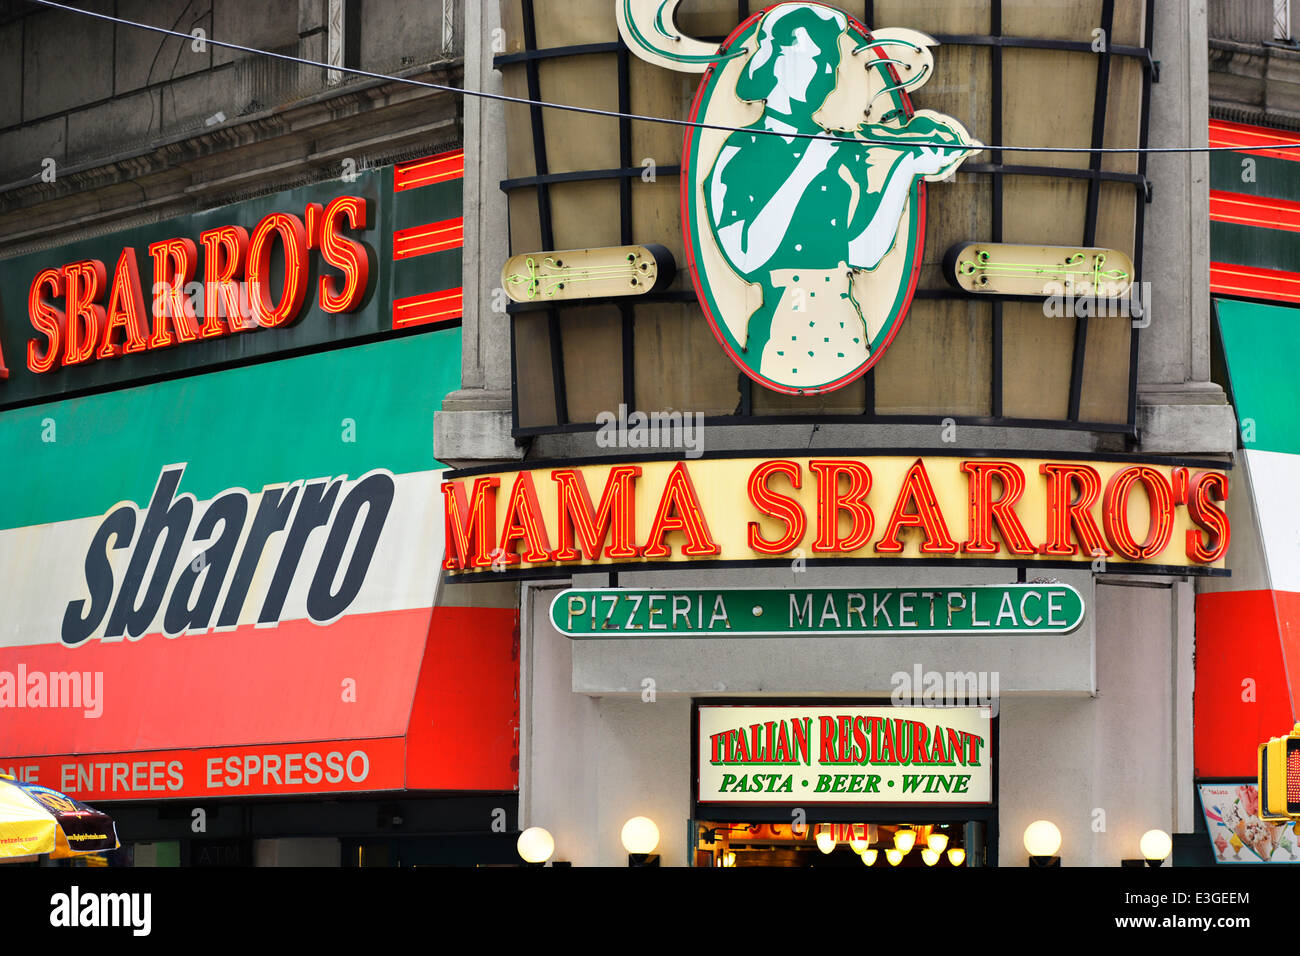 Sbarro, Mama Sbarro's, Times Square, New York Stock Photo